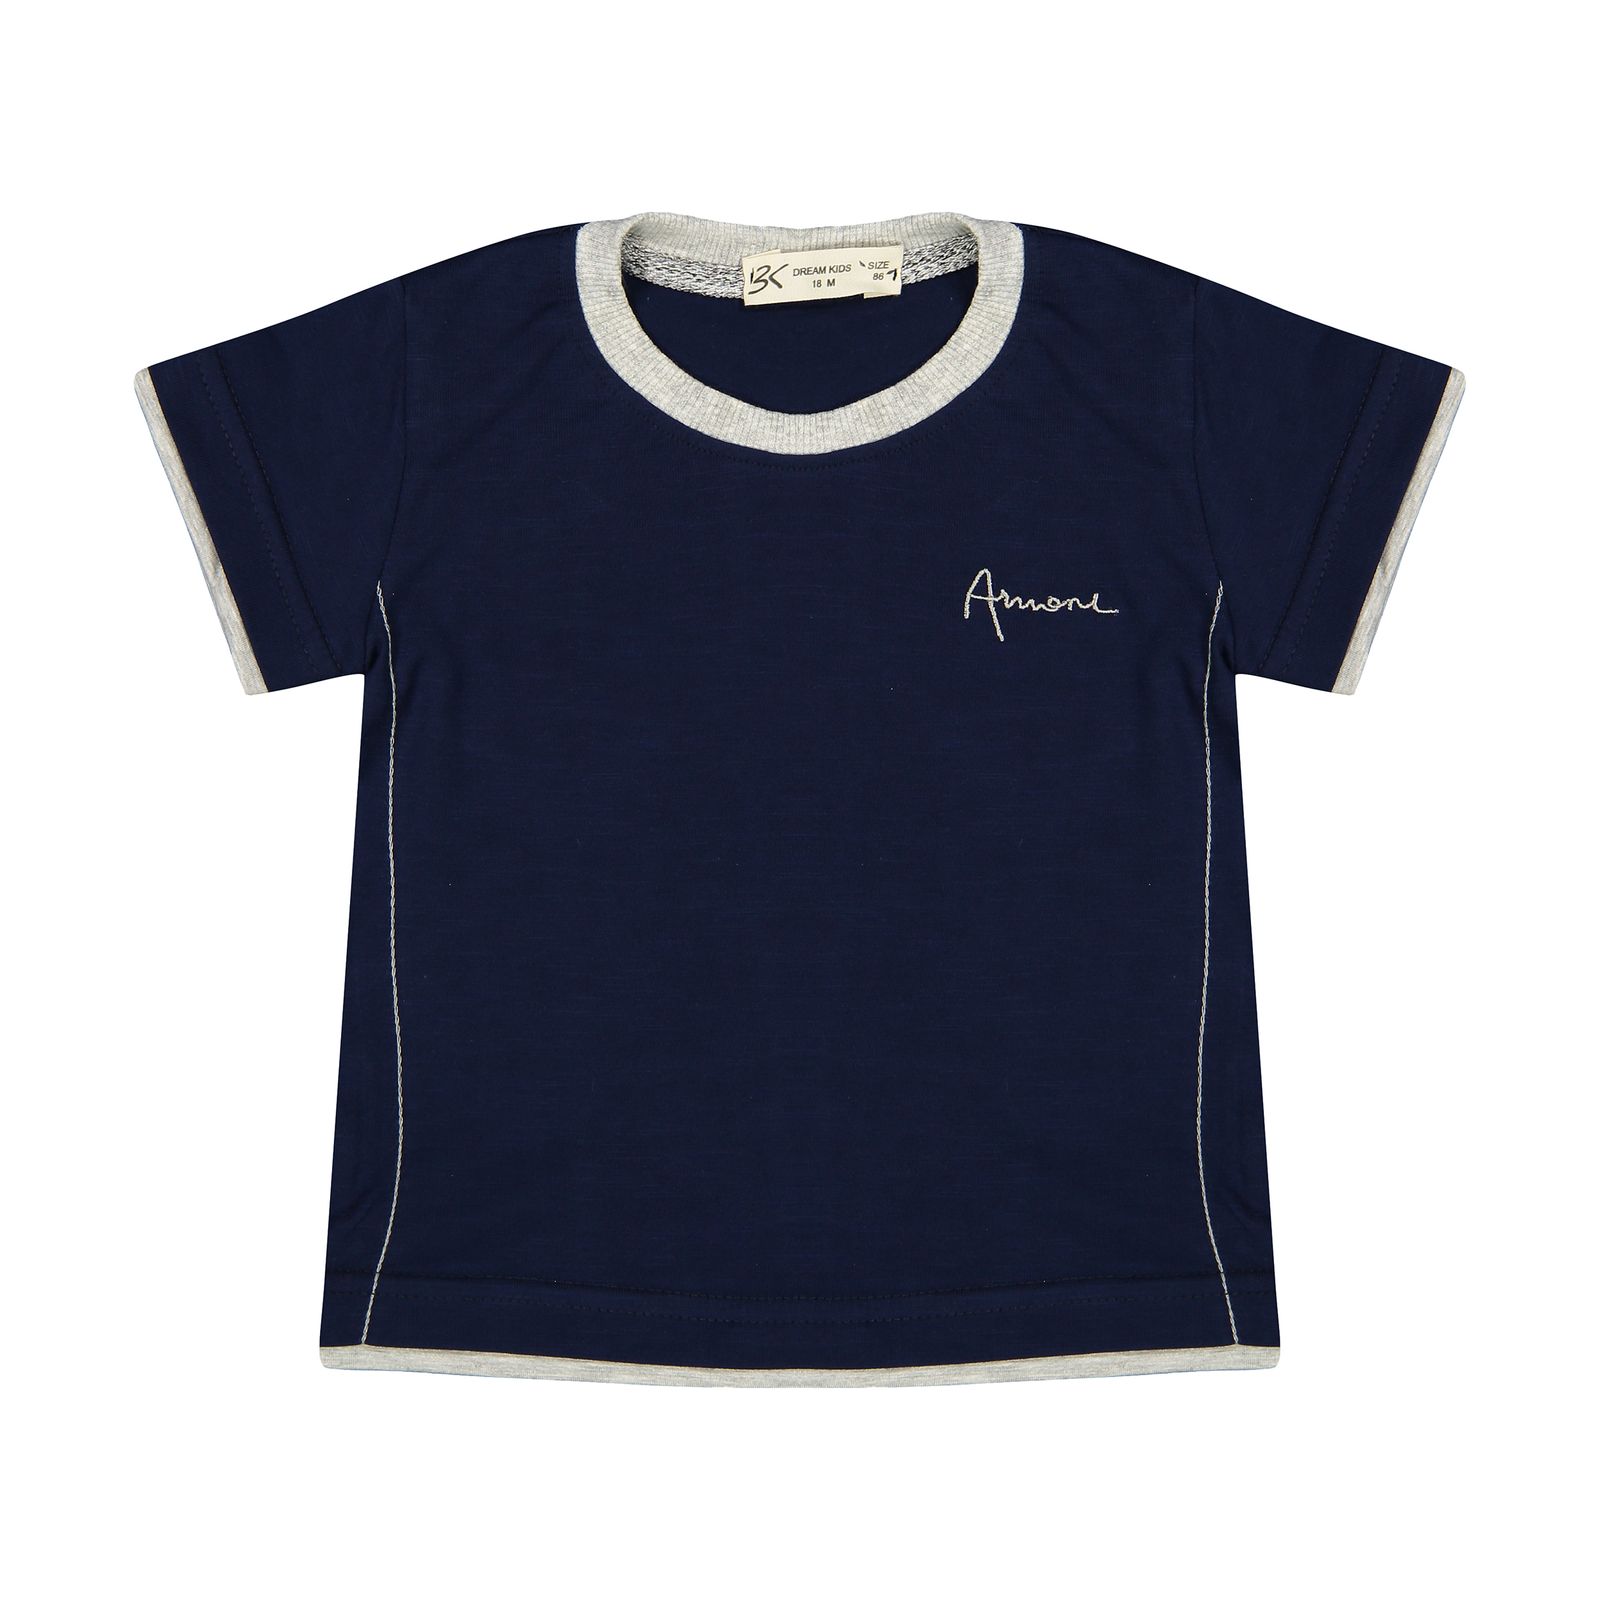 تی شرت پسرانه بی کی مدل 2211205-59